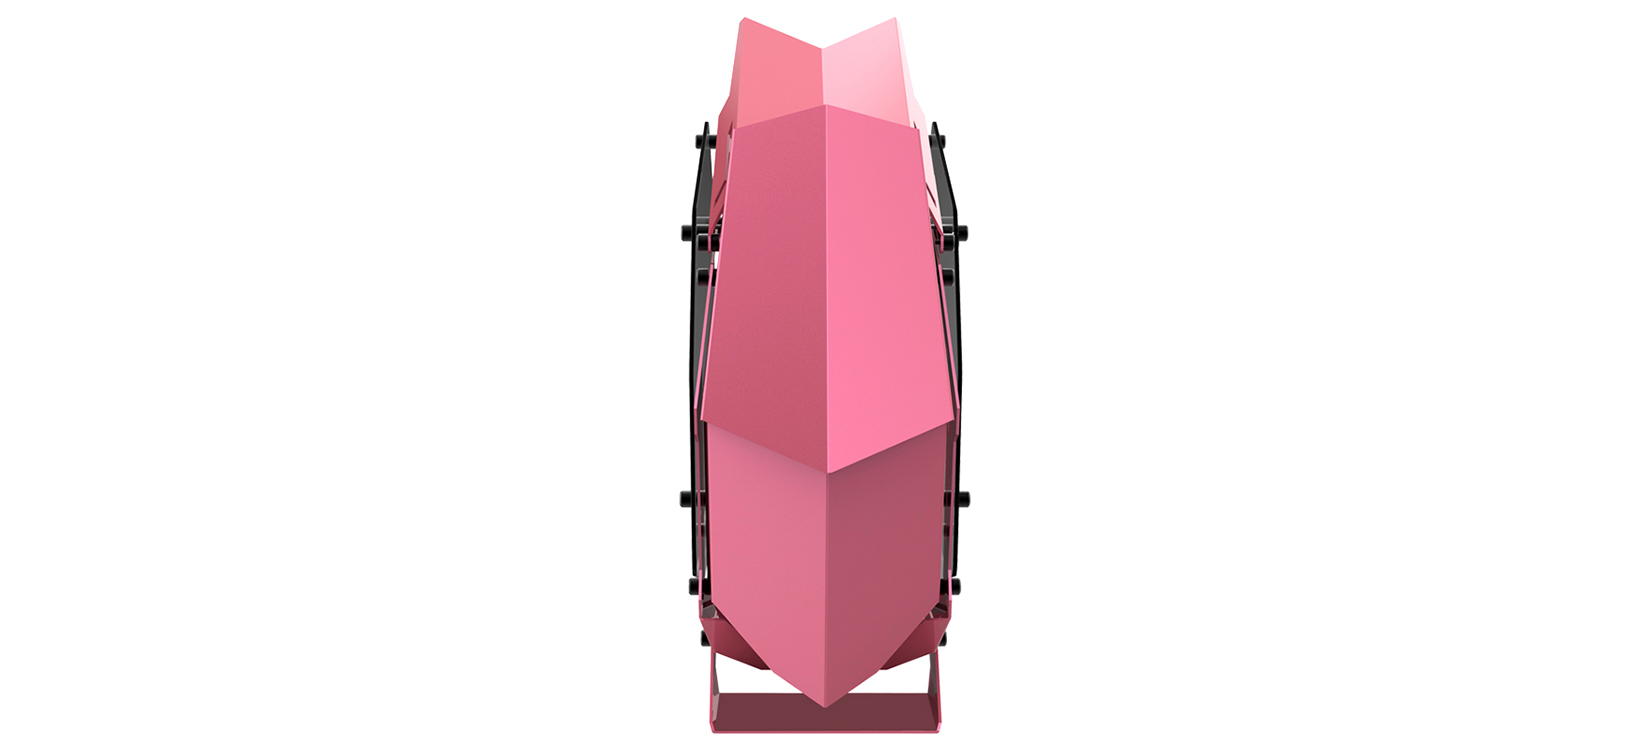  Case Jonsbo MOD3 Pink (Mid Tower/Màu Hồng) giới thiệu